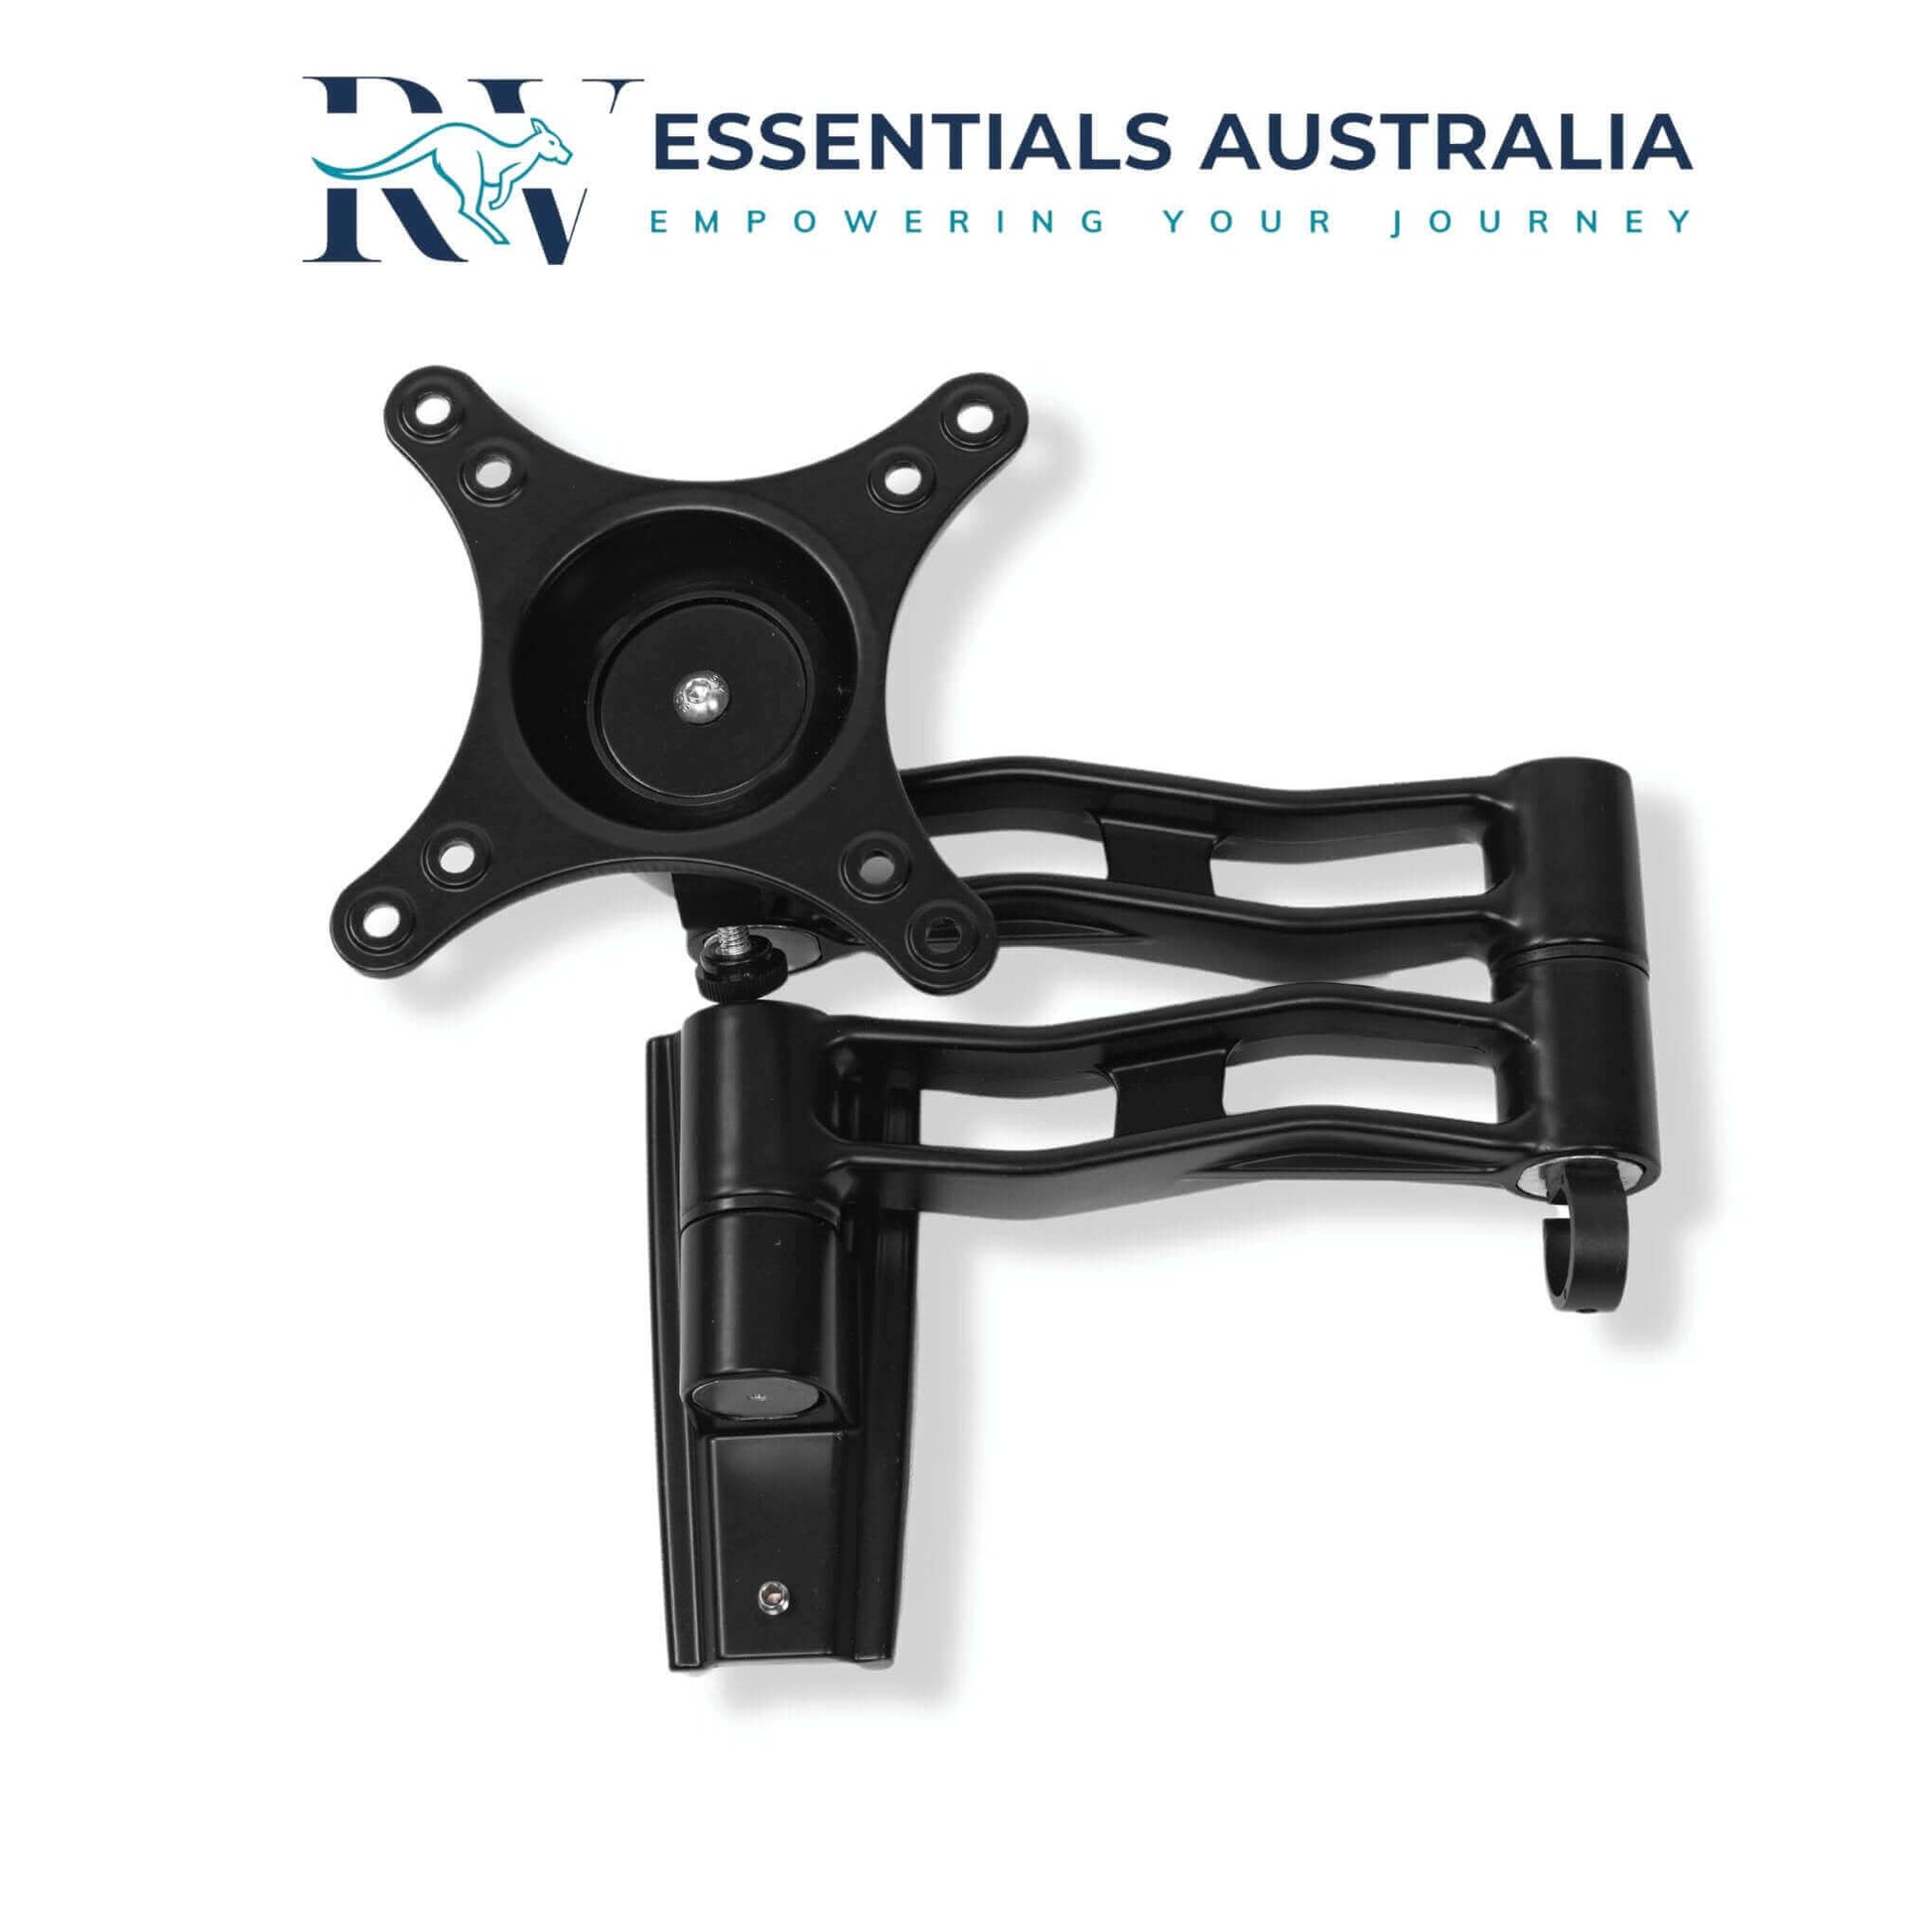 TV Mounting Brackets for Caravan - Dual Arm TV Bracket for Caravans - RV Essentials Australia